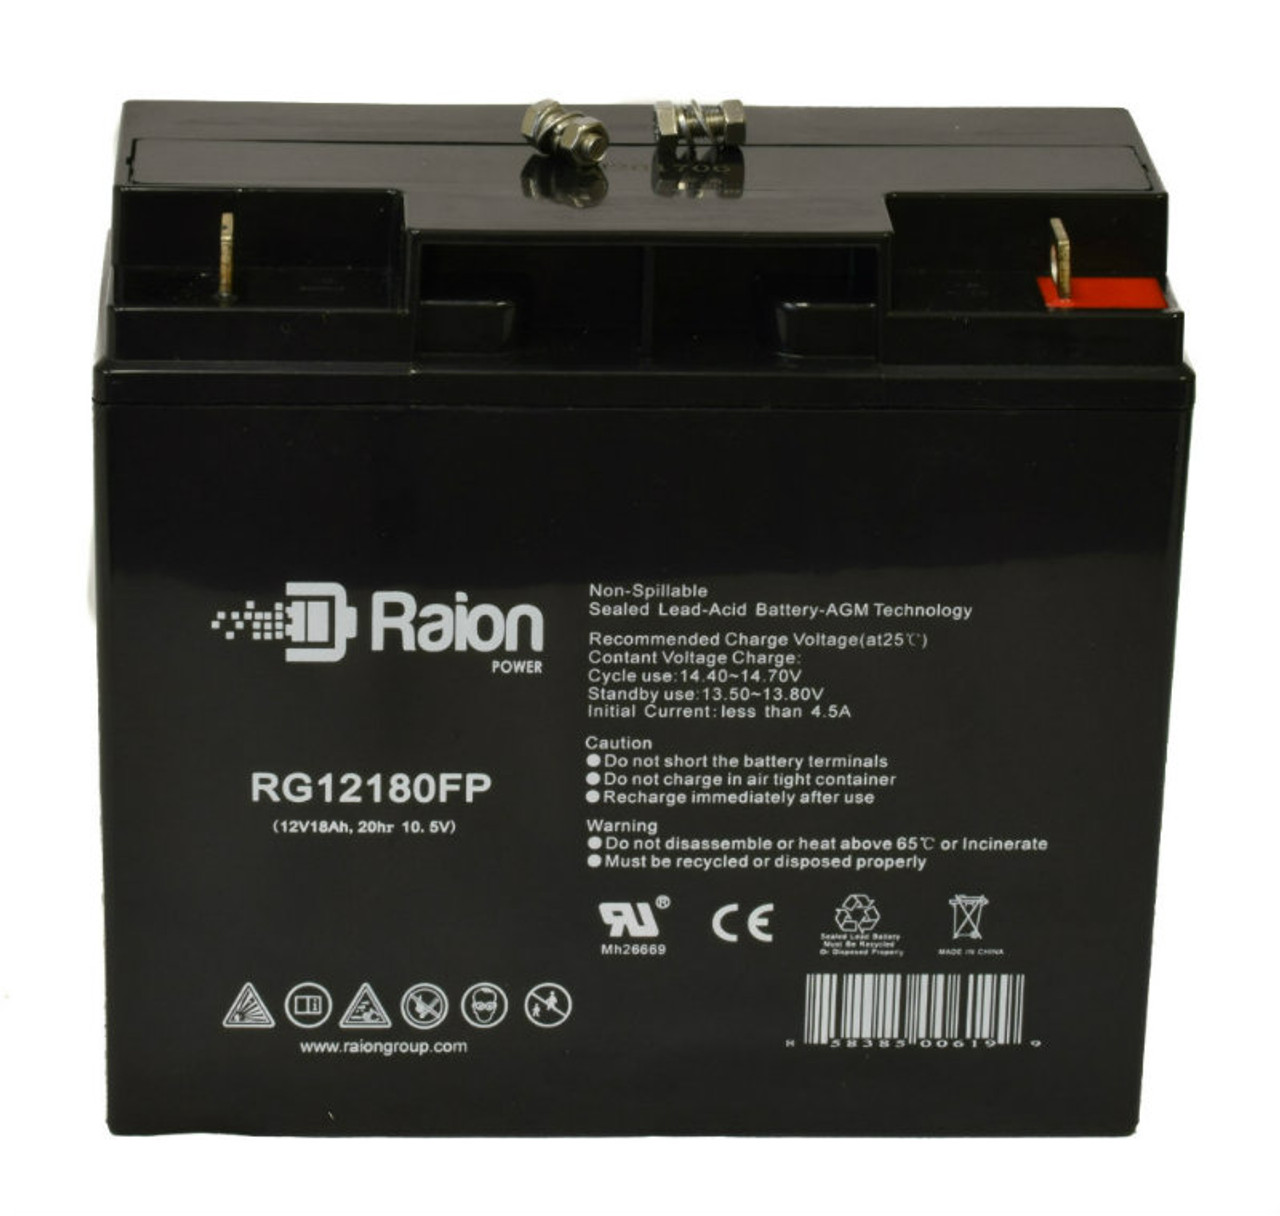 Raion Power RG12180FP 12V 18Ah Lead Acid Battery for Japan PE12V15